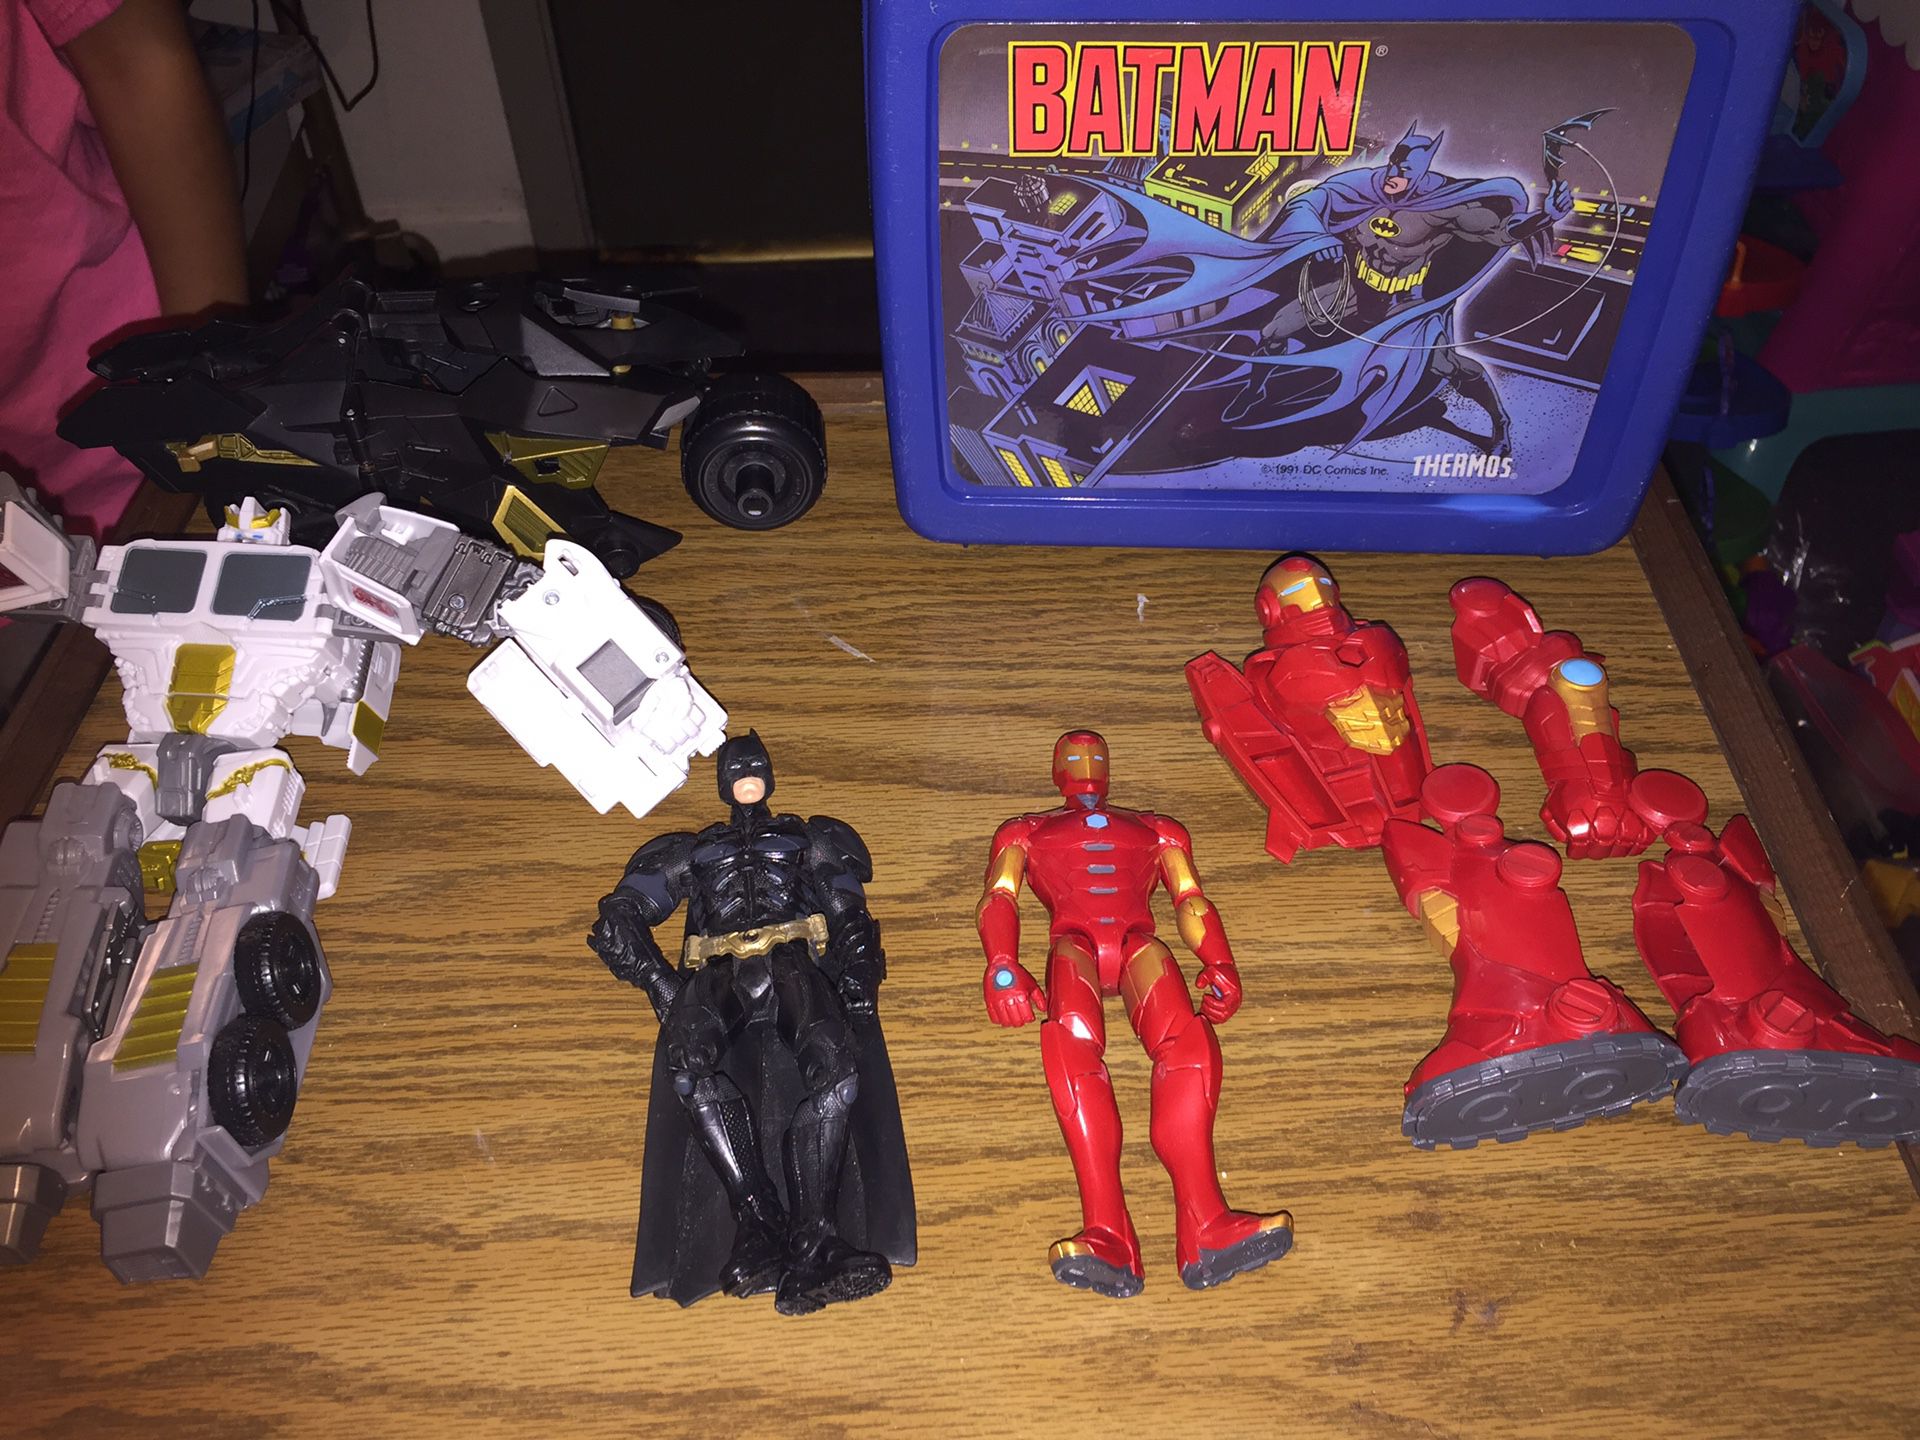 Batman and action figures